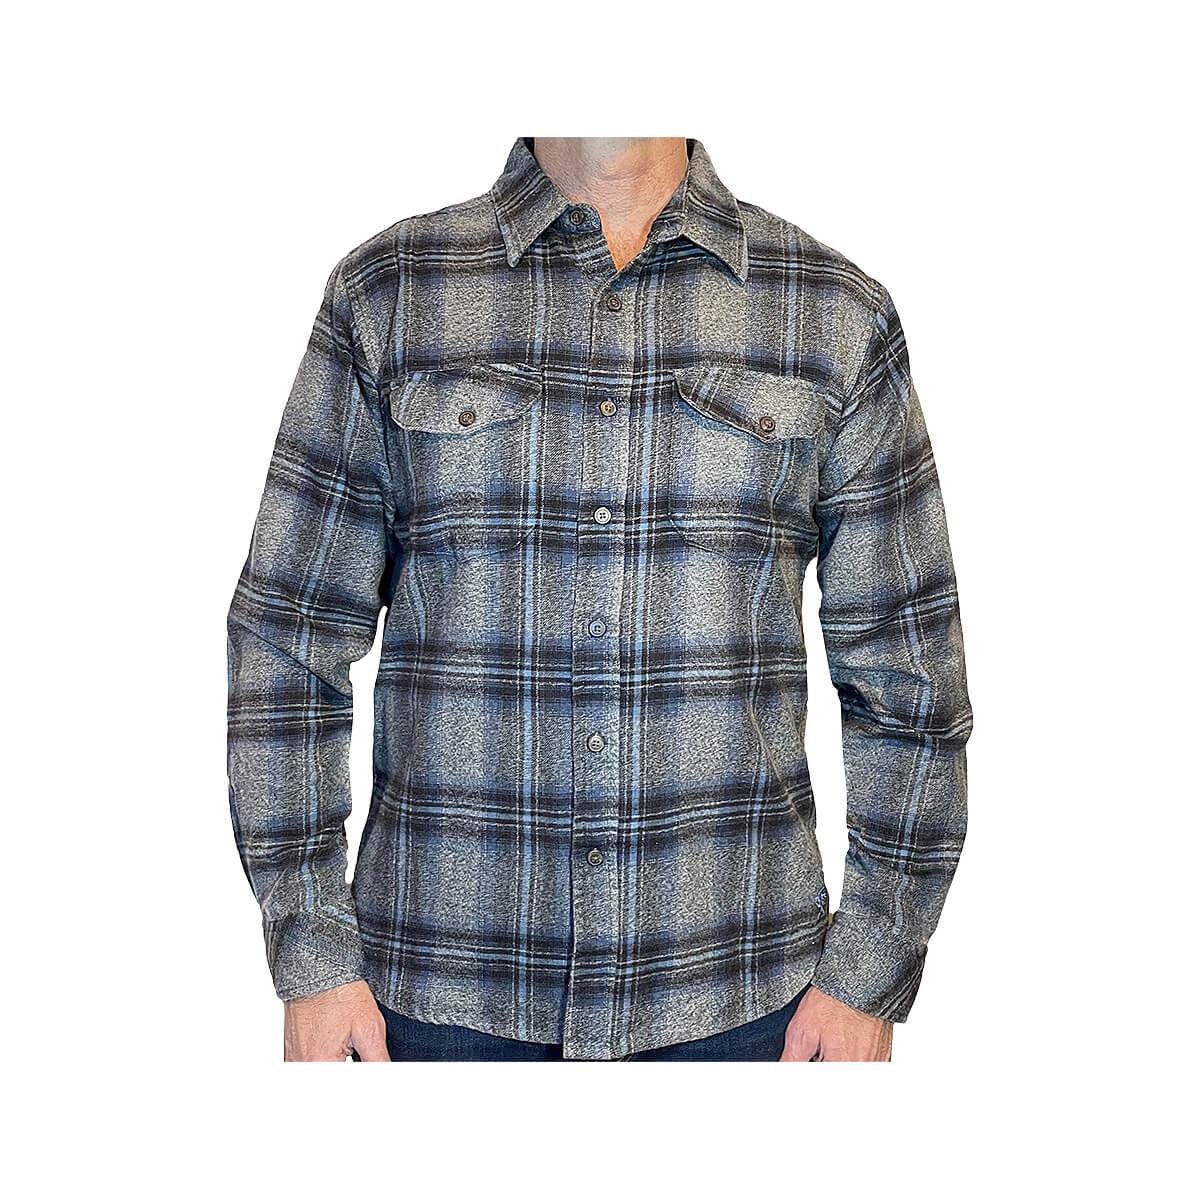  Men's Granite Grindle Flannel Shirt